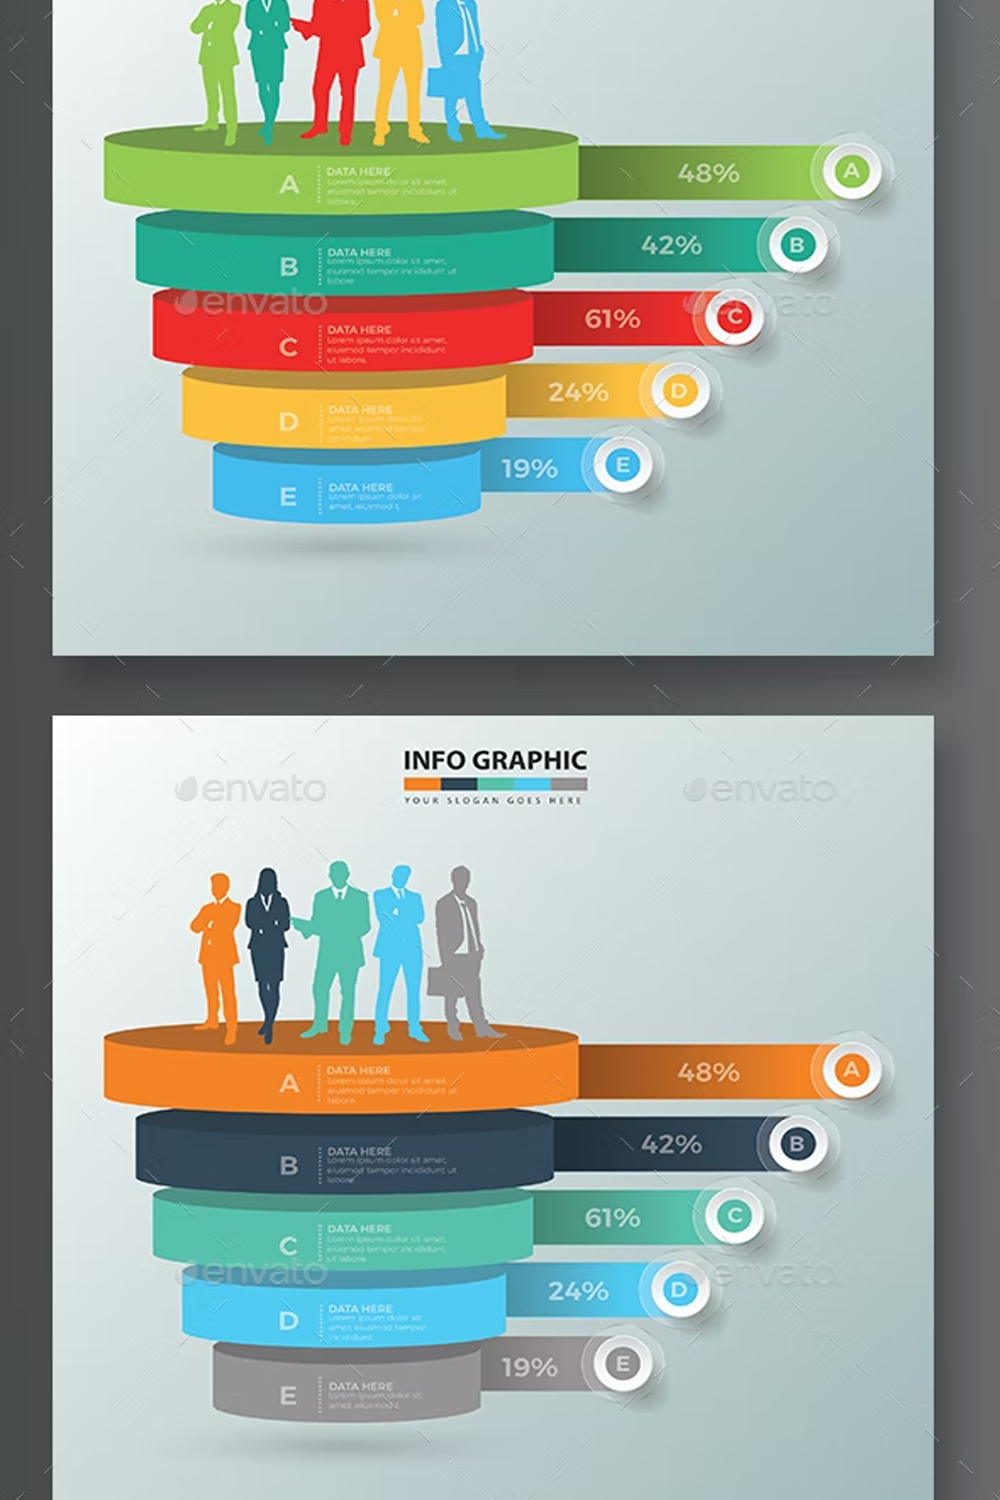 Illustrations human resource infographic design of pinterest.